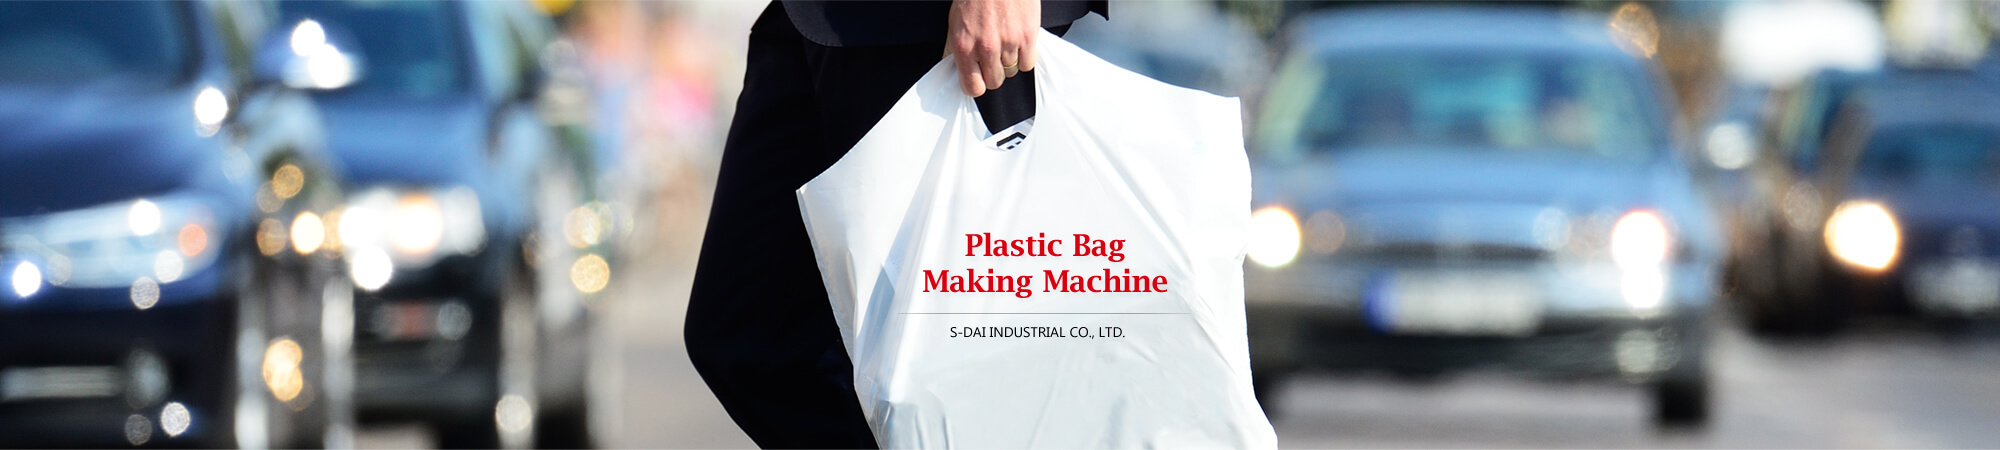 kv banner of application on garment bag, plastic courier bag making machine manufacturing services